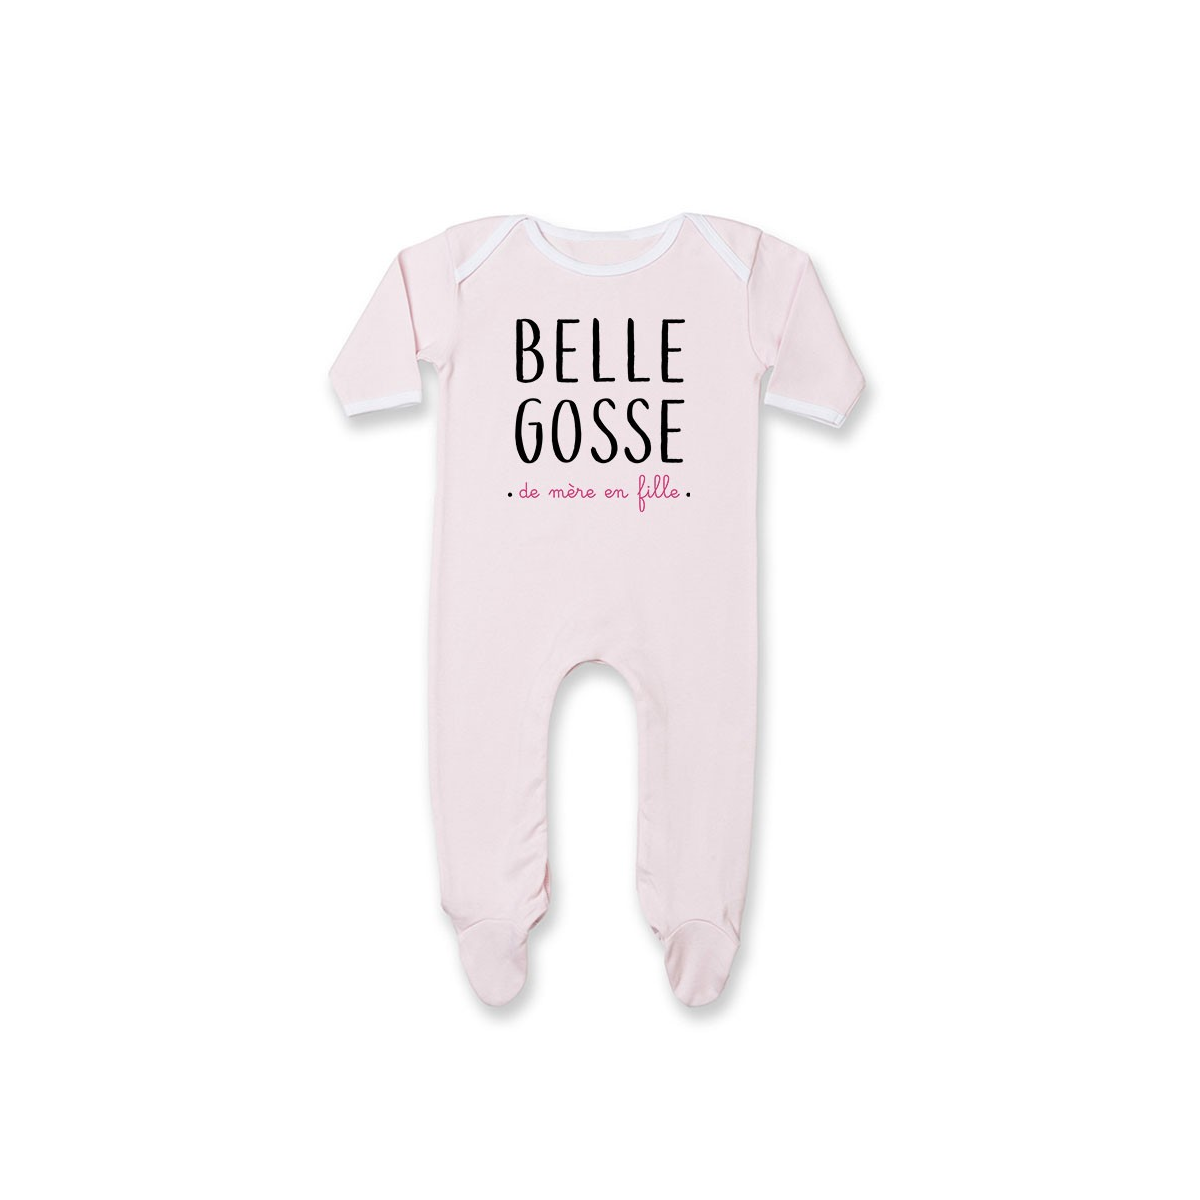 Pyjama bébé Belle gosse de mère en fille